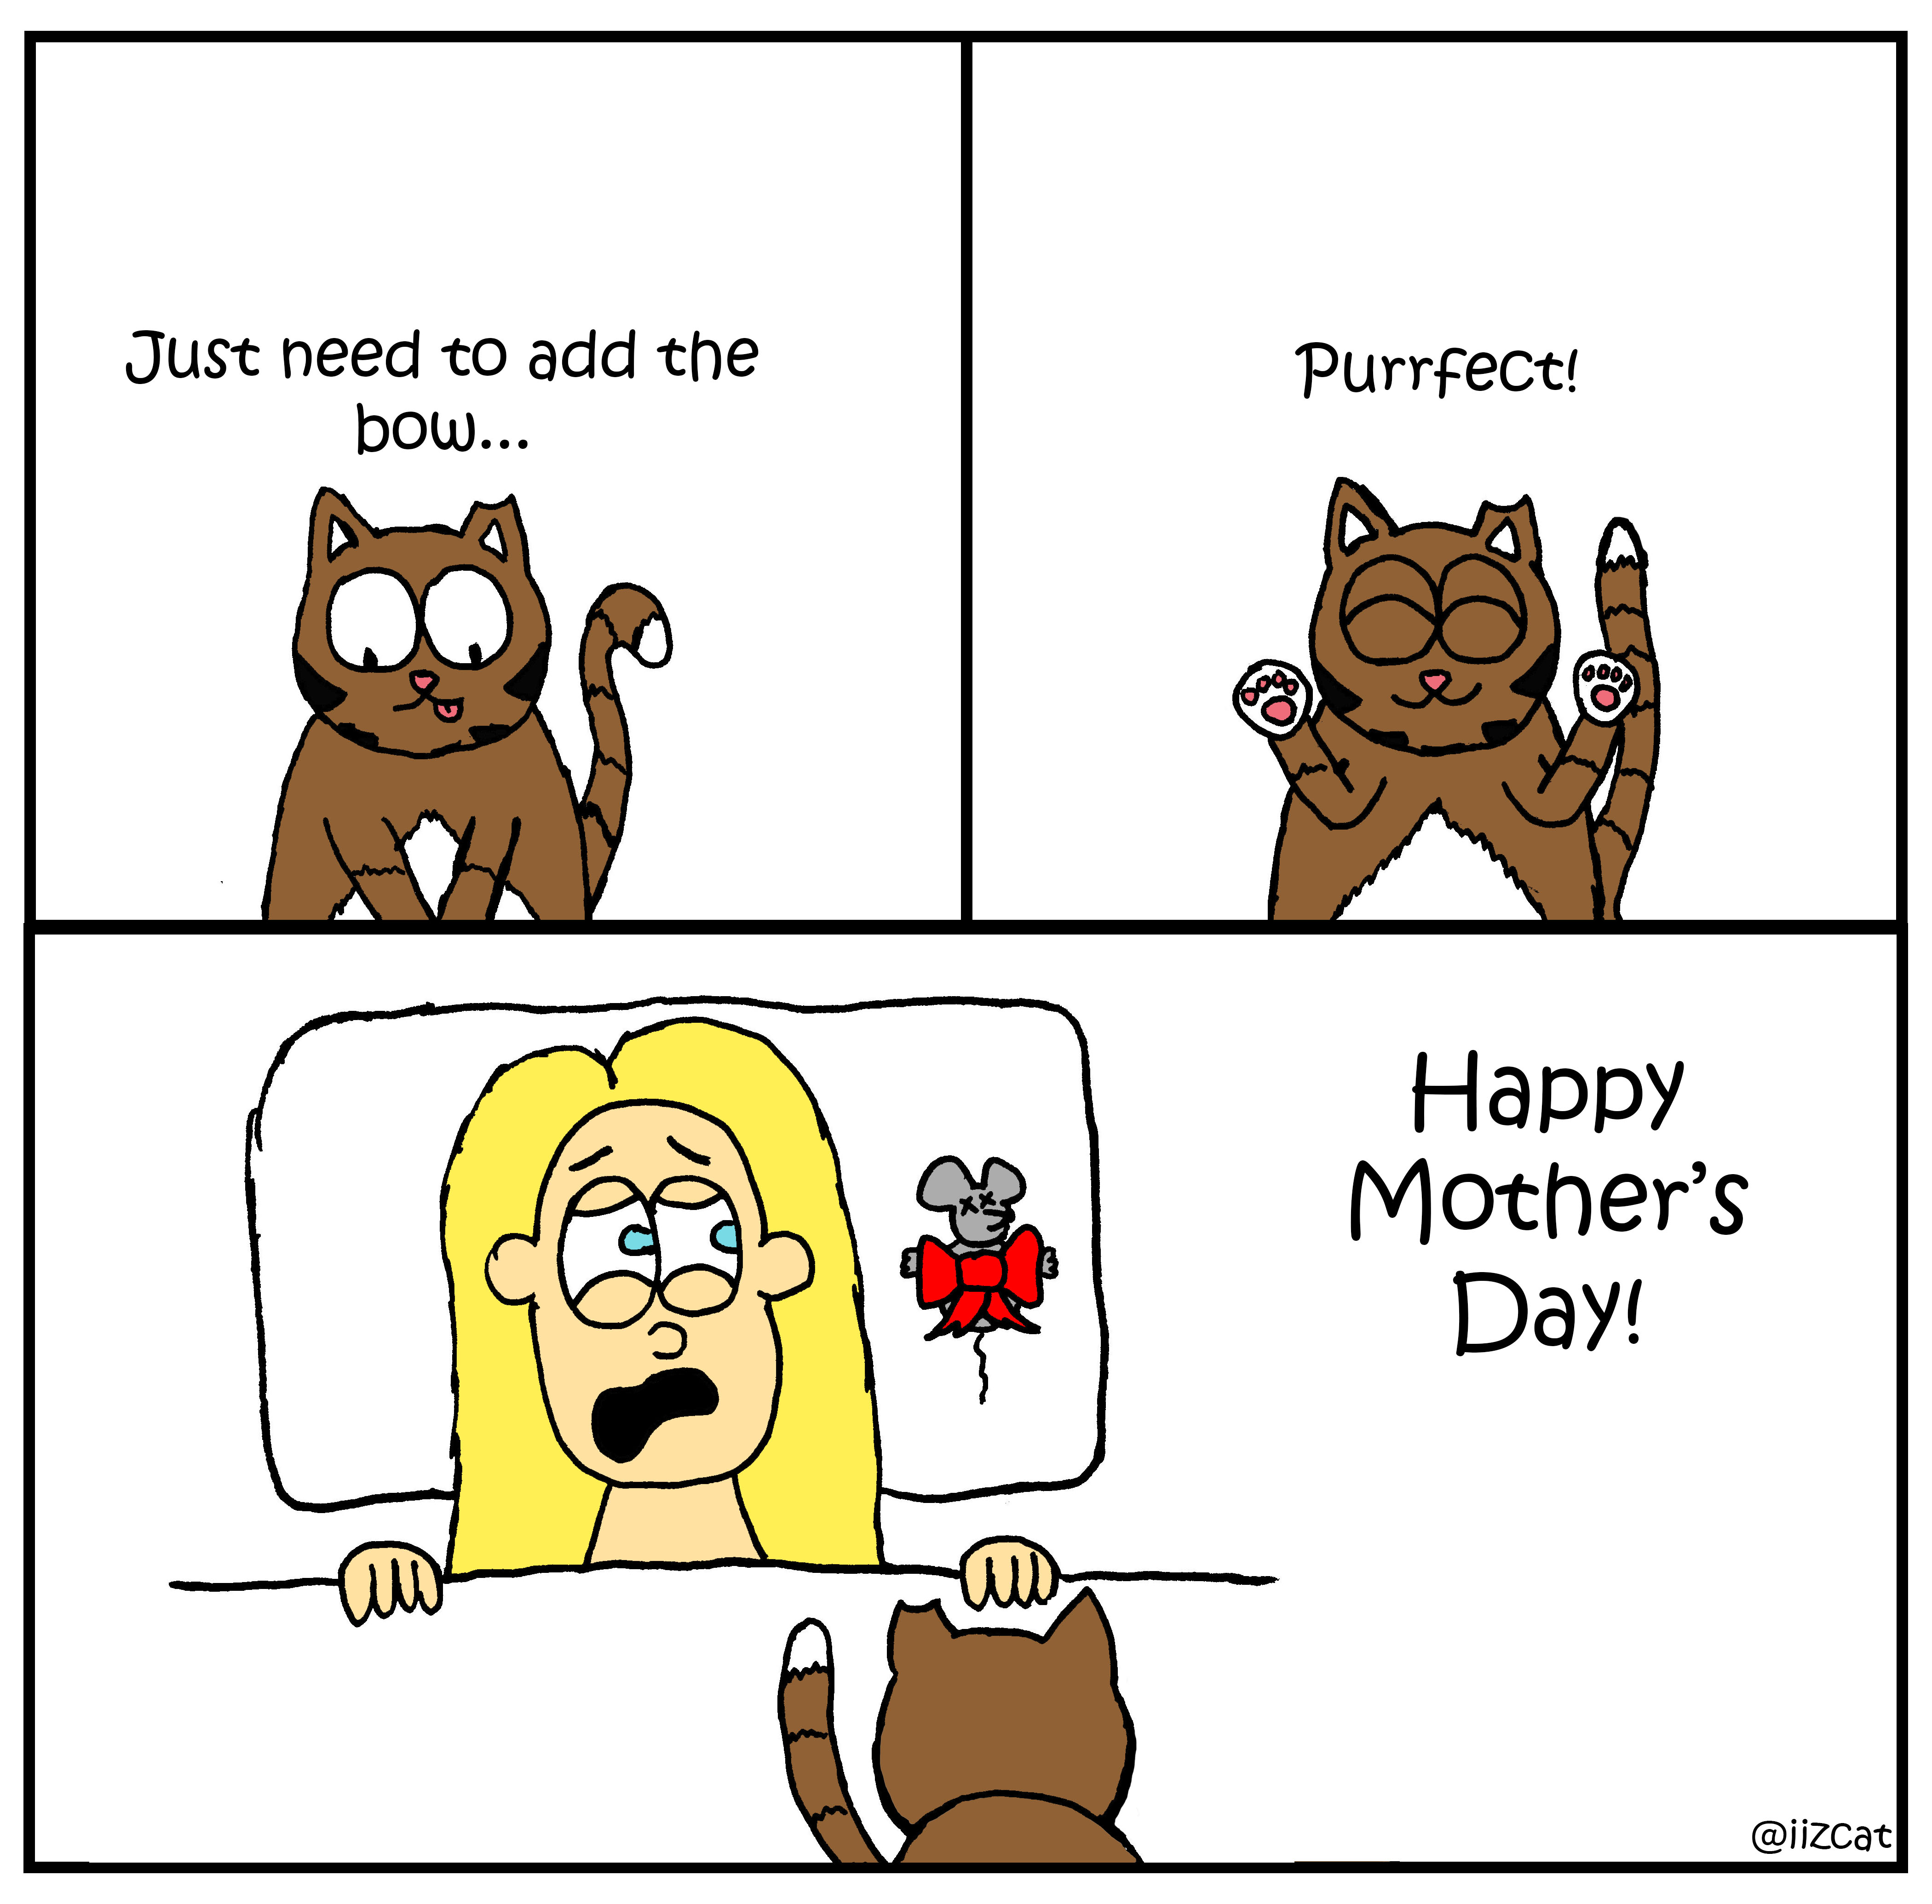 happy mothers day iizcat comic